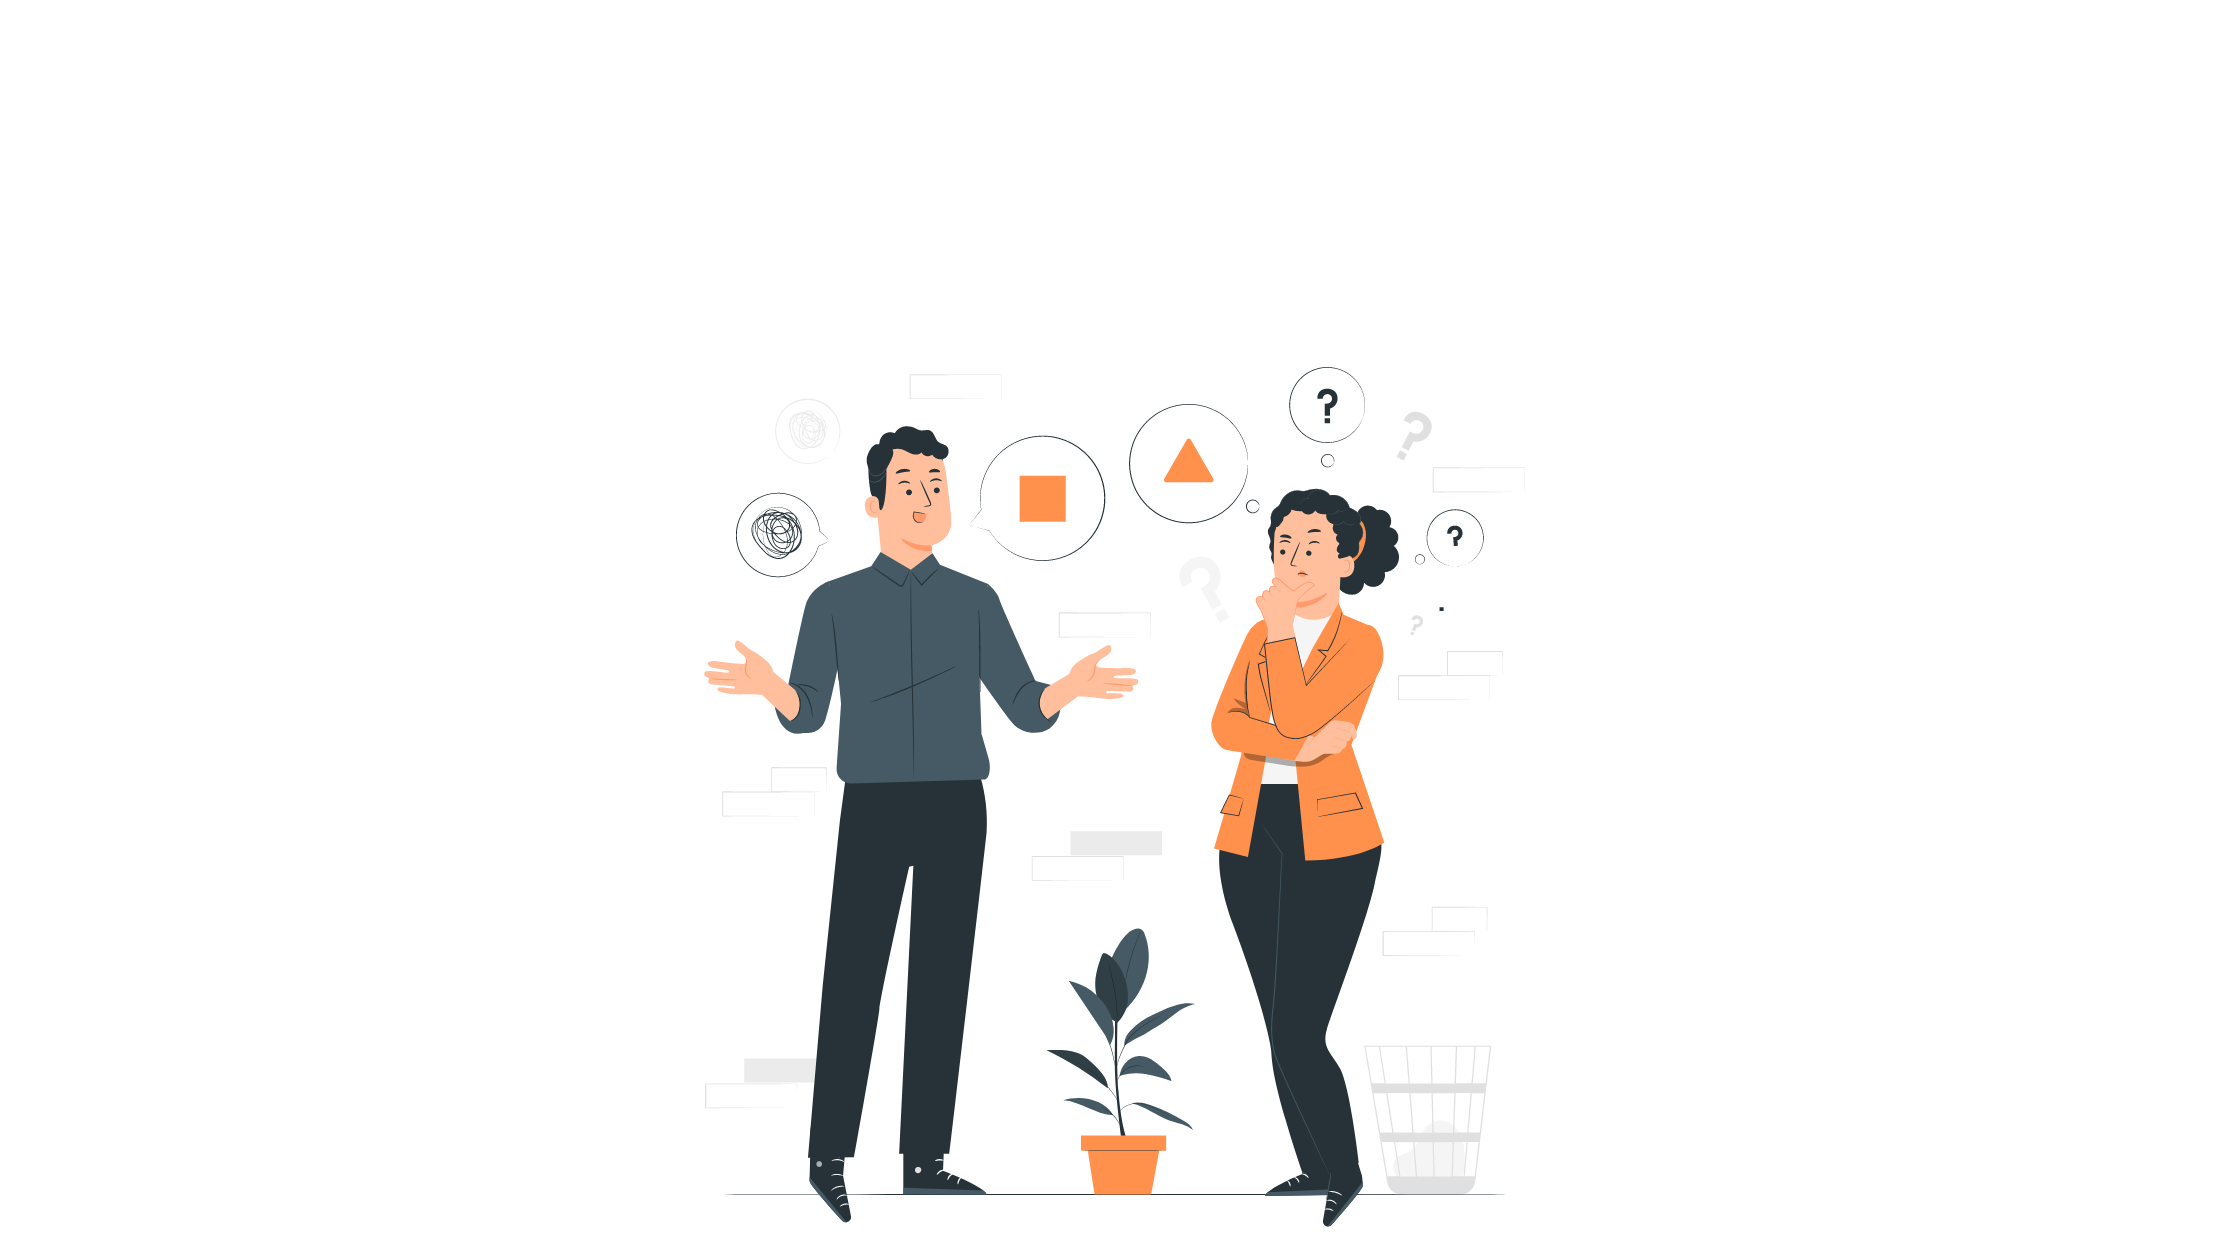 two people talking - improve feedback